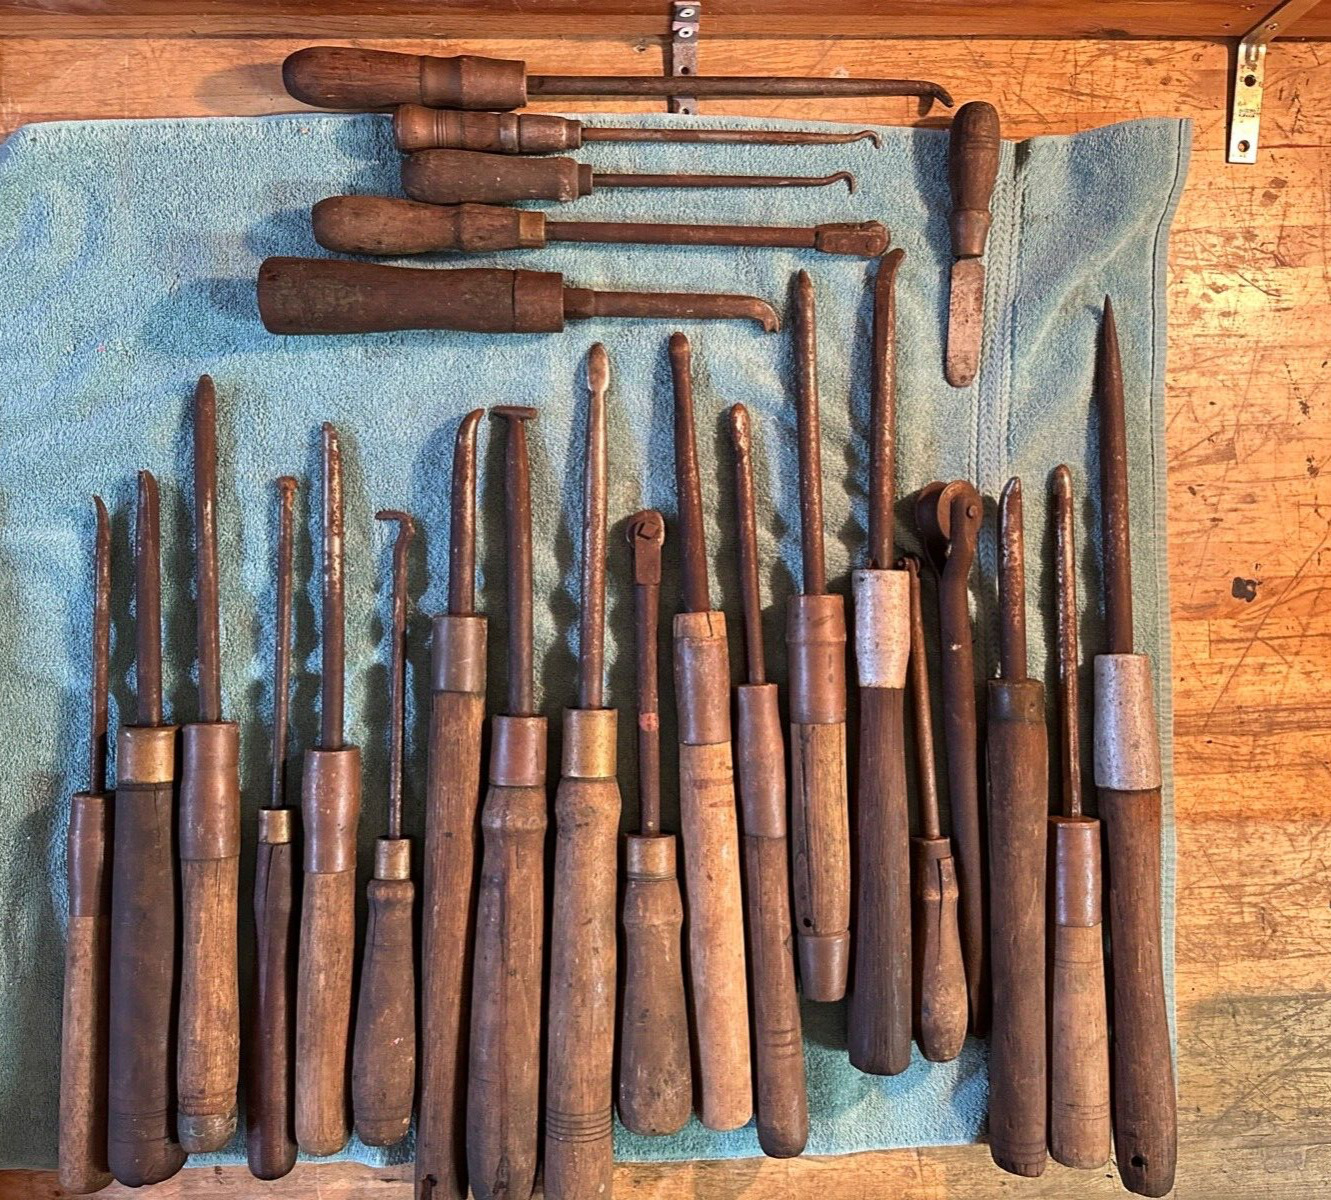 Lot of 25 Antique Primitive Sheet Metal Forming Wooden Handled Molding Tools